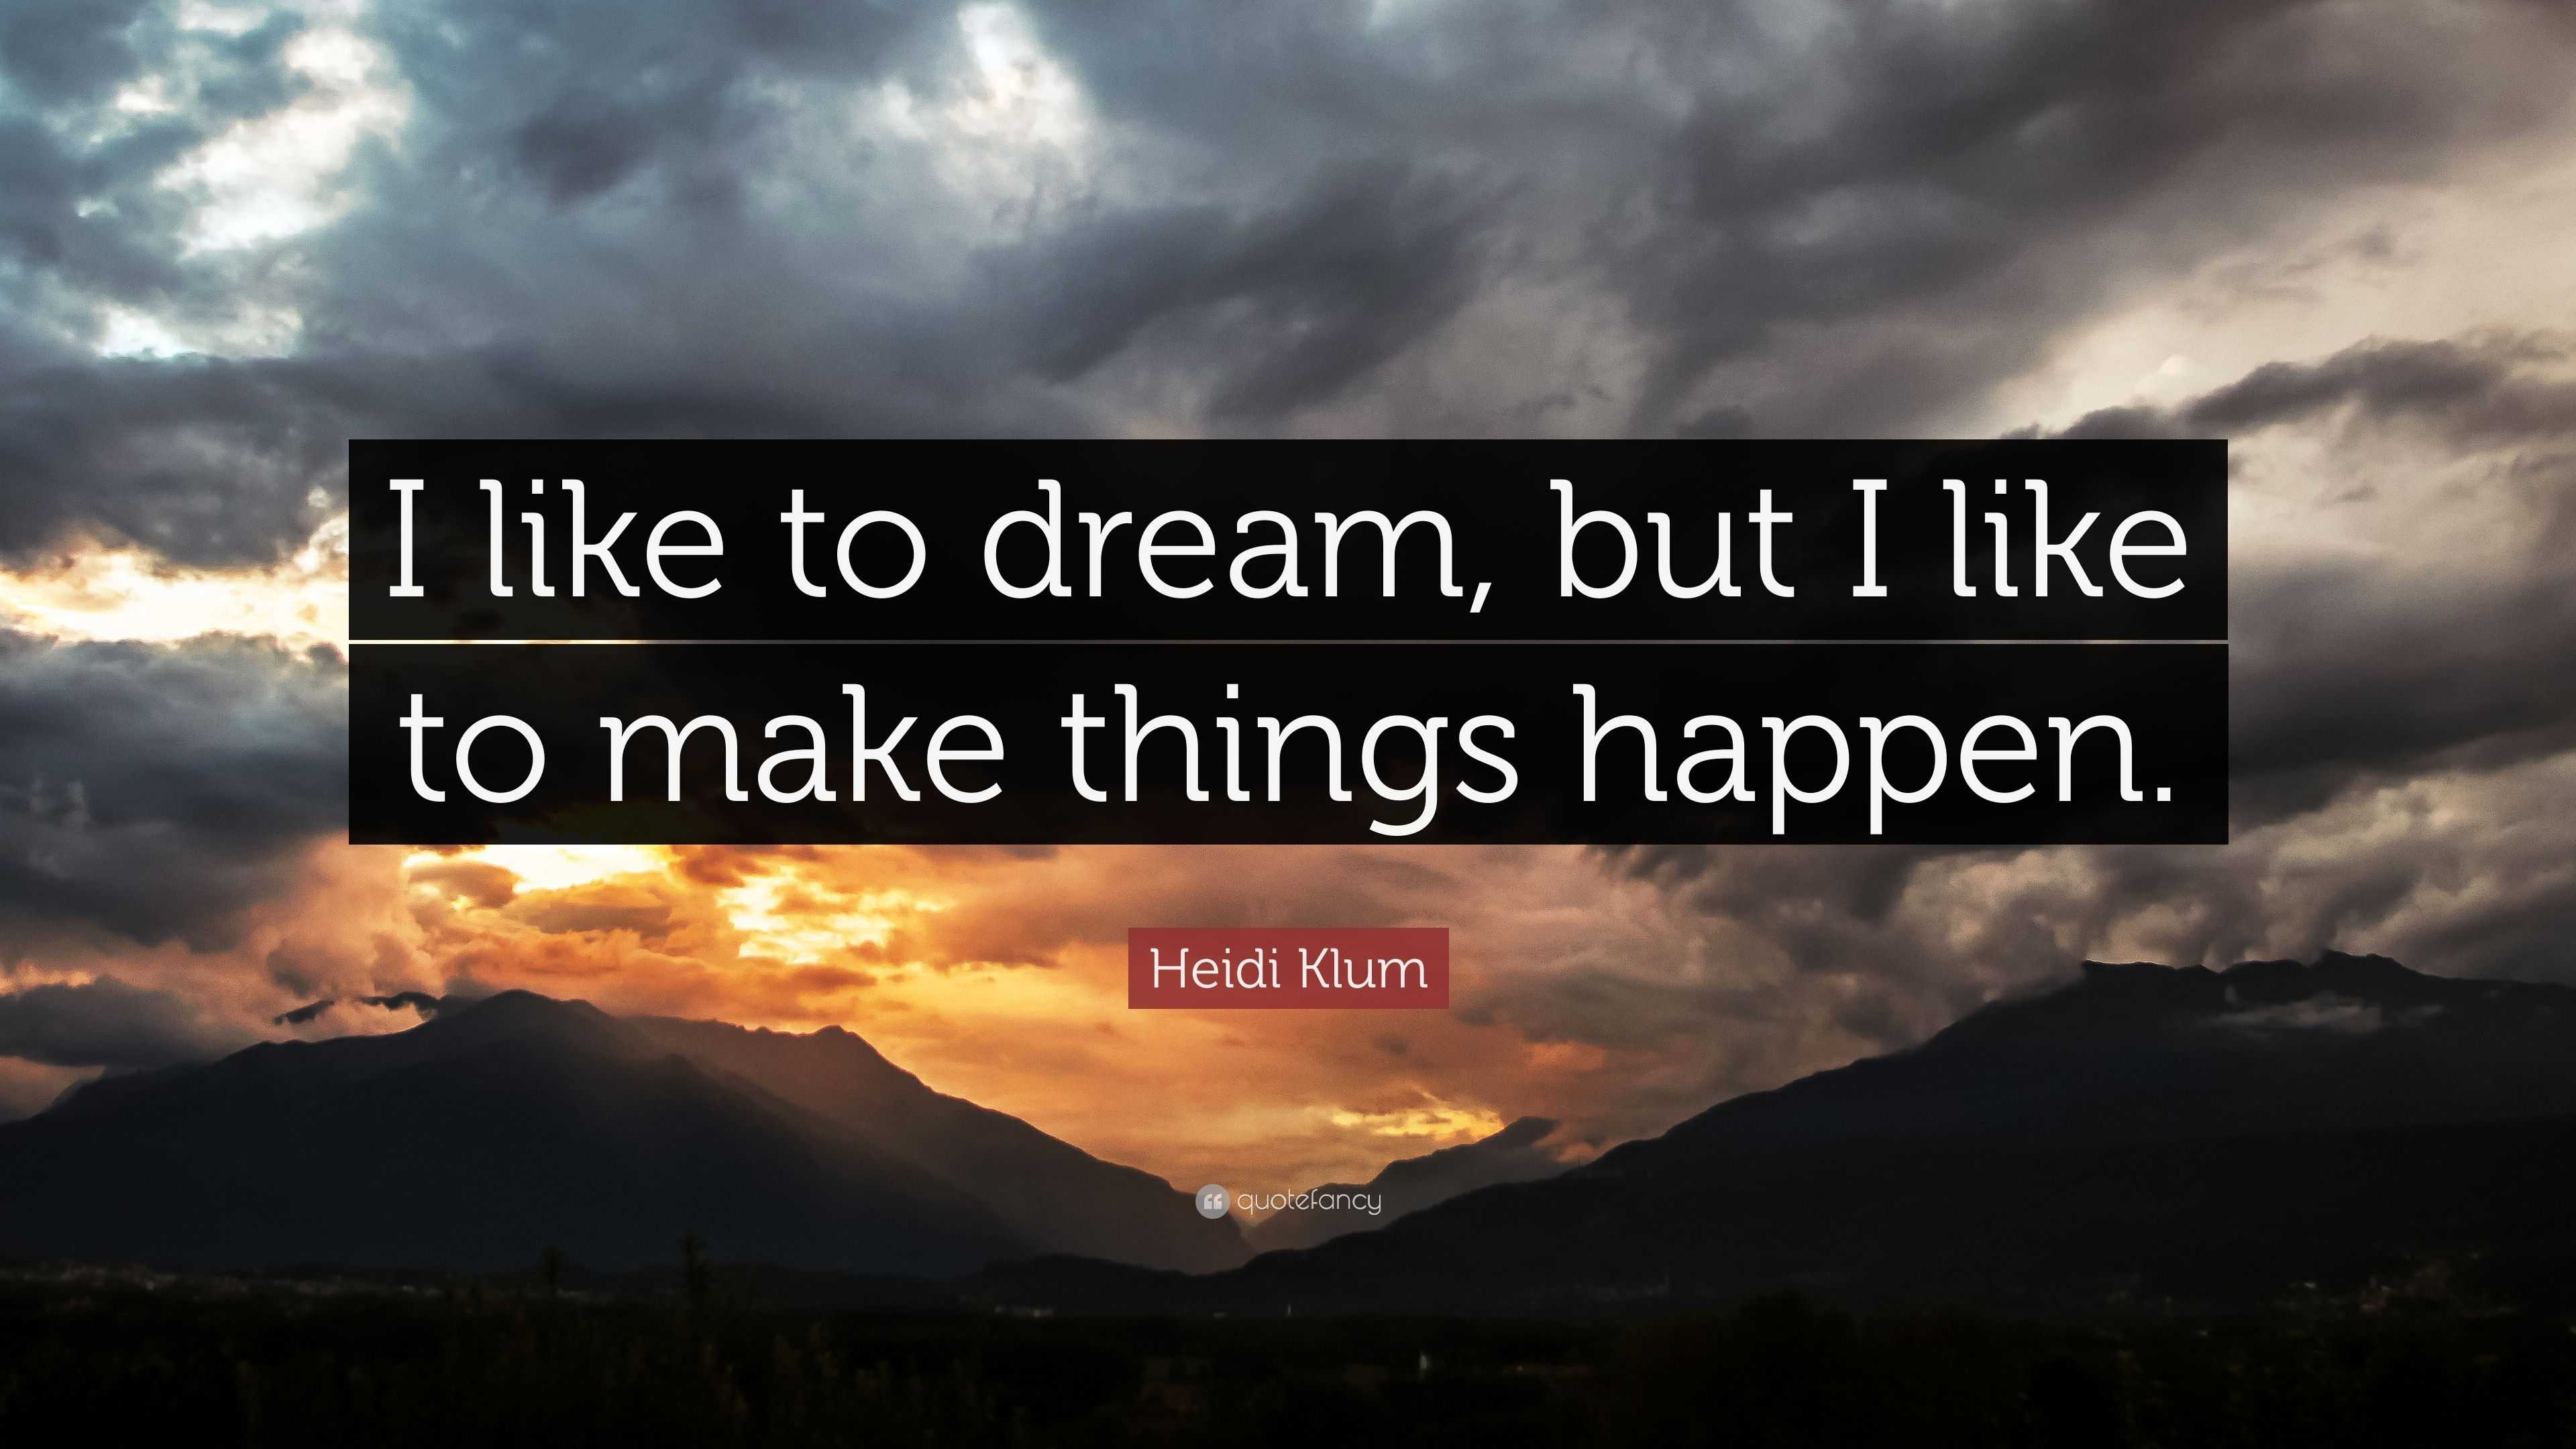 Heidi Klum Quote: “I like to dream, but I like to make things happen.”